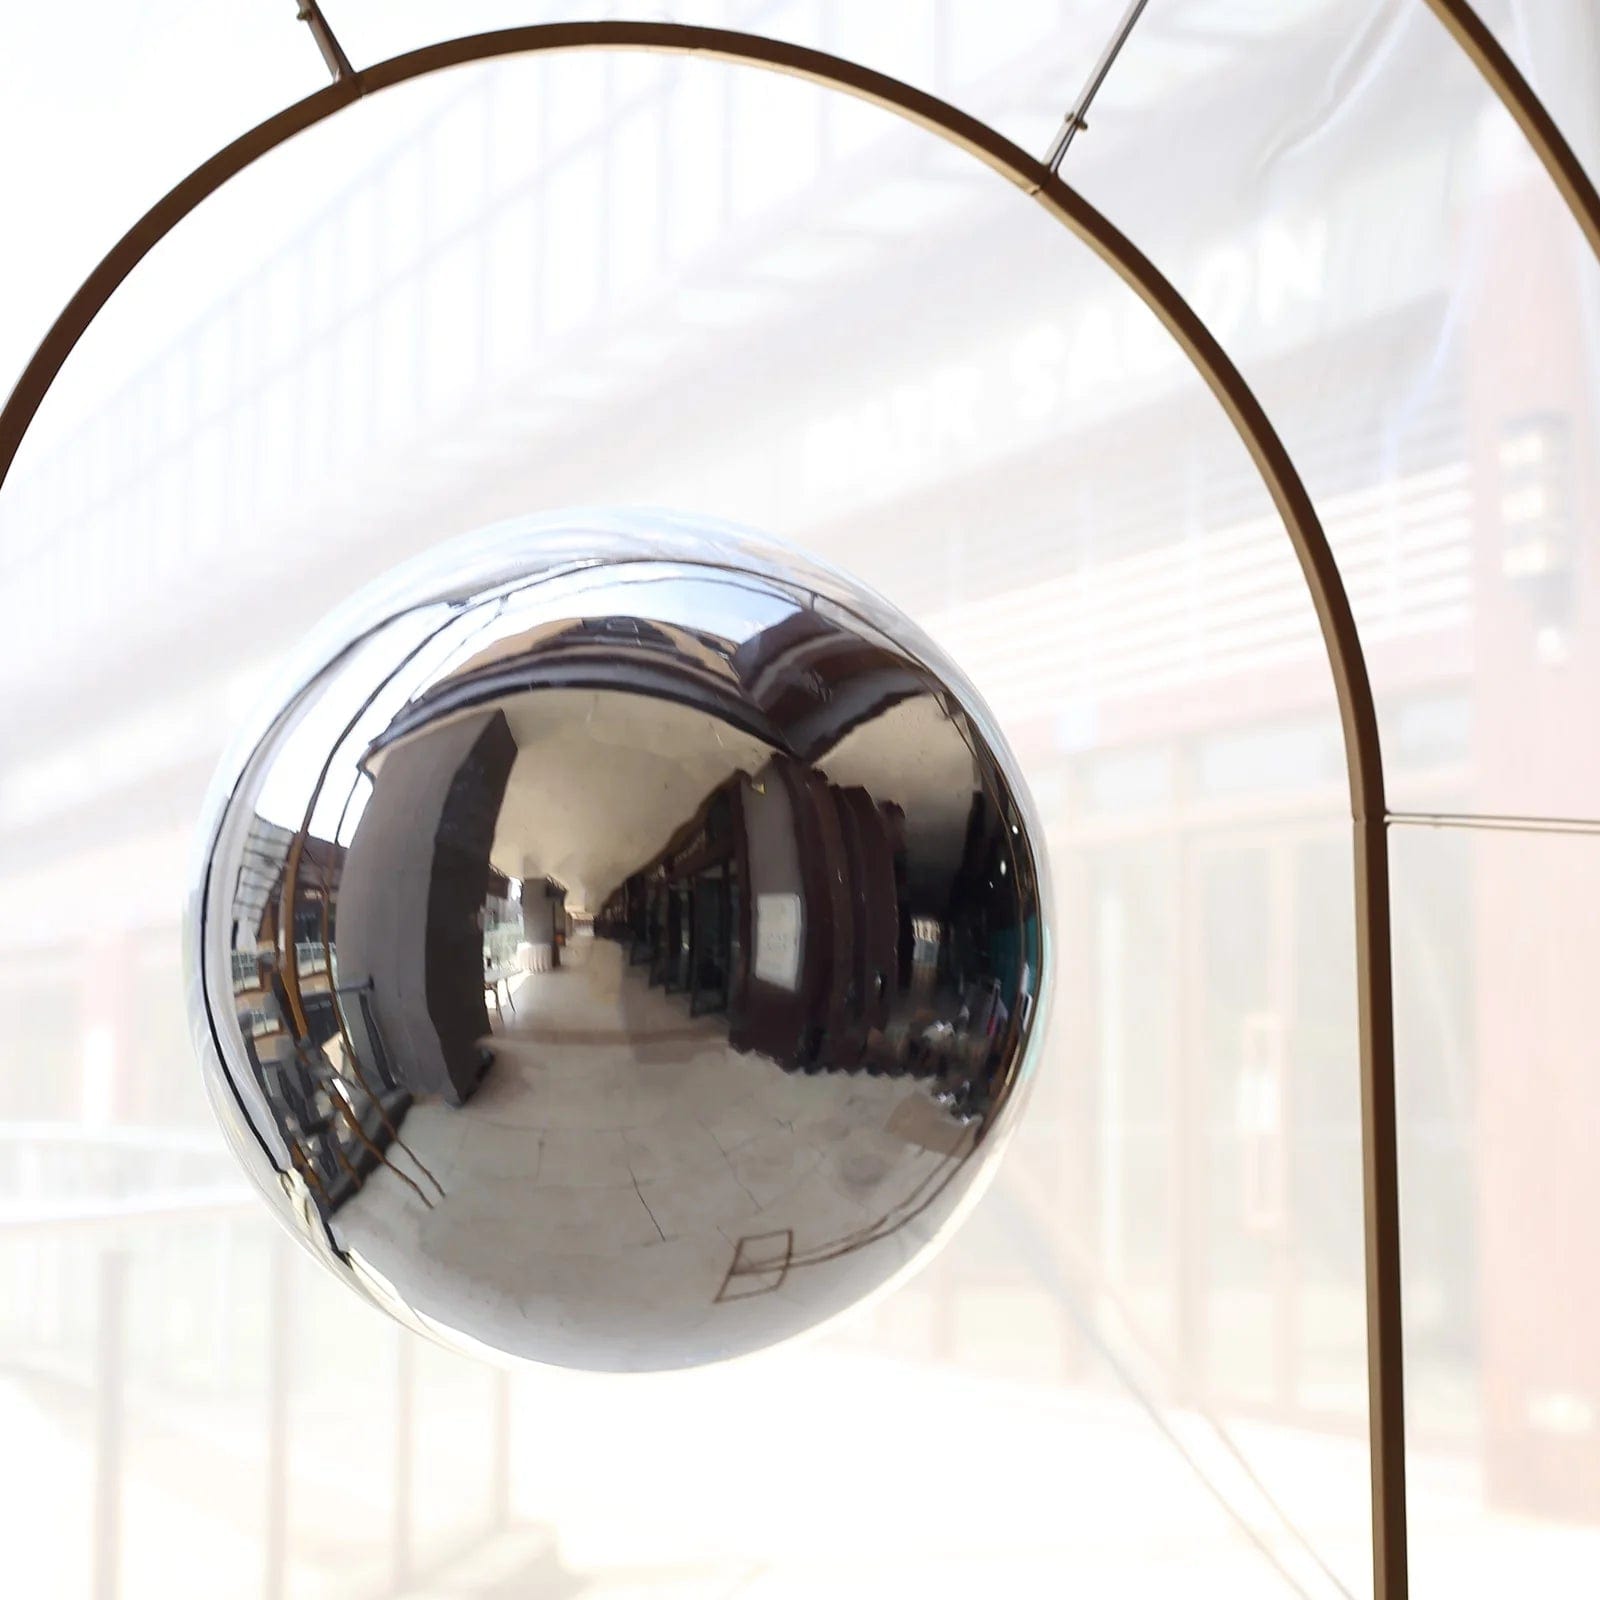 Stainless Steel Globe Gazing Reflective Mirror Ball